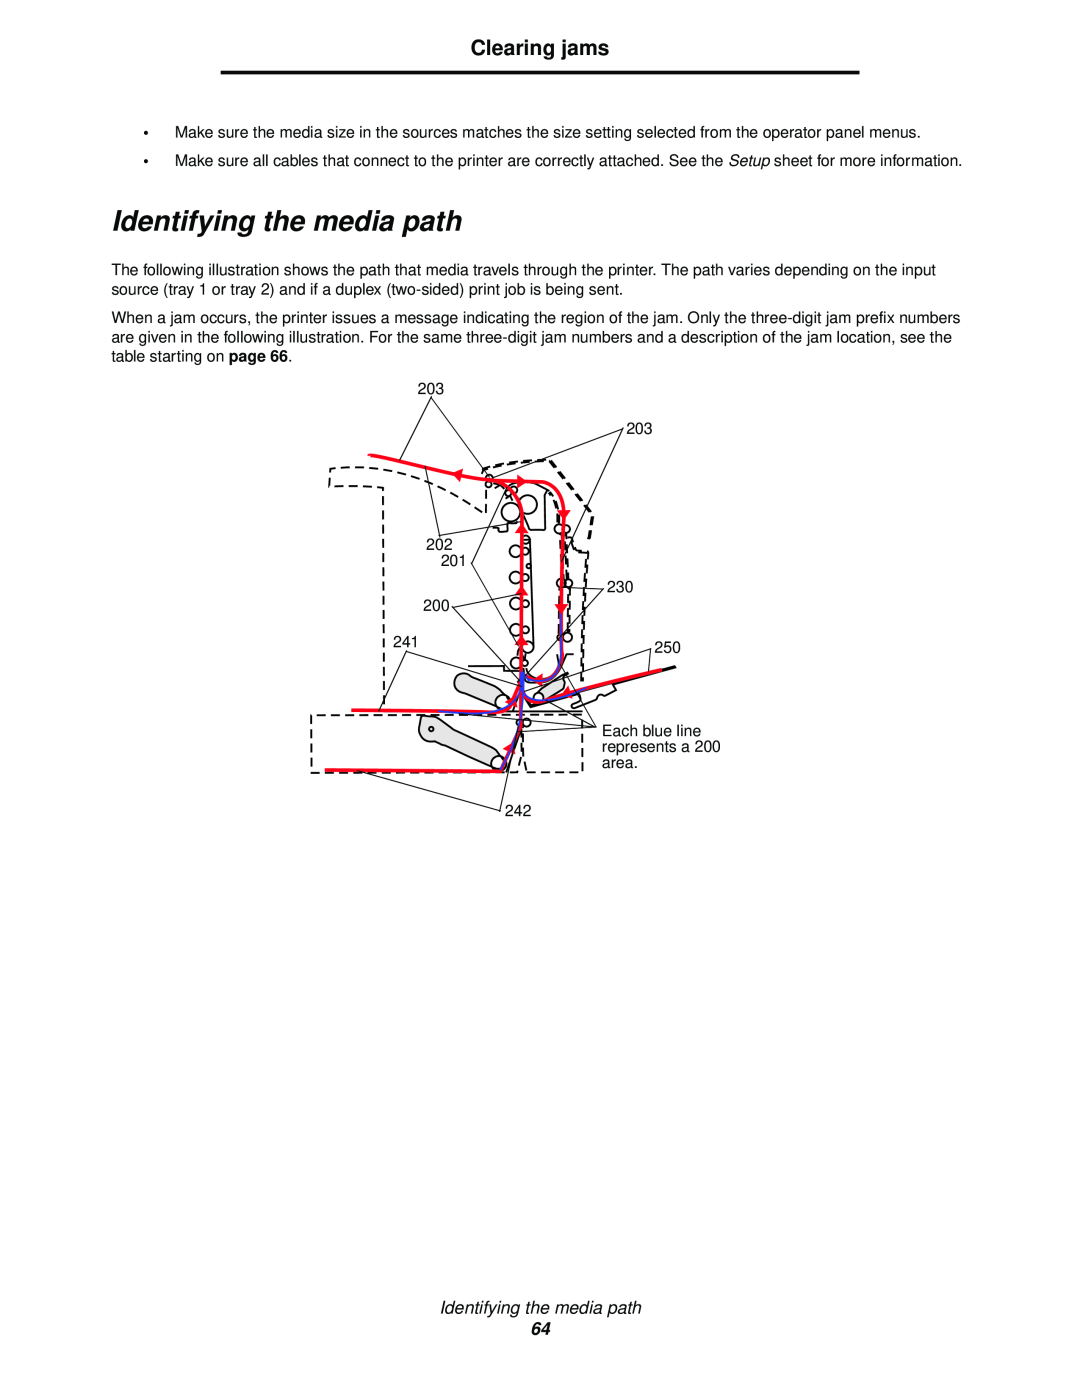 Lexmark C520, C524, C522 manual Identifying the media path, Clearing jams 